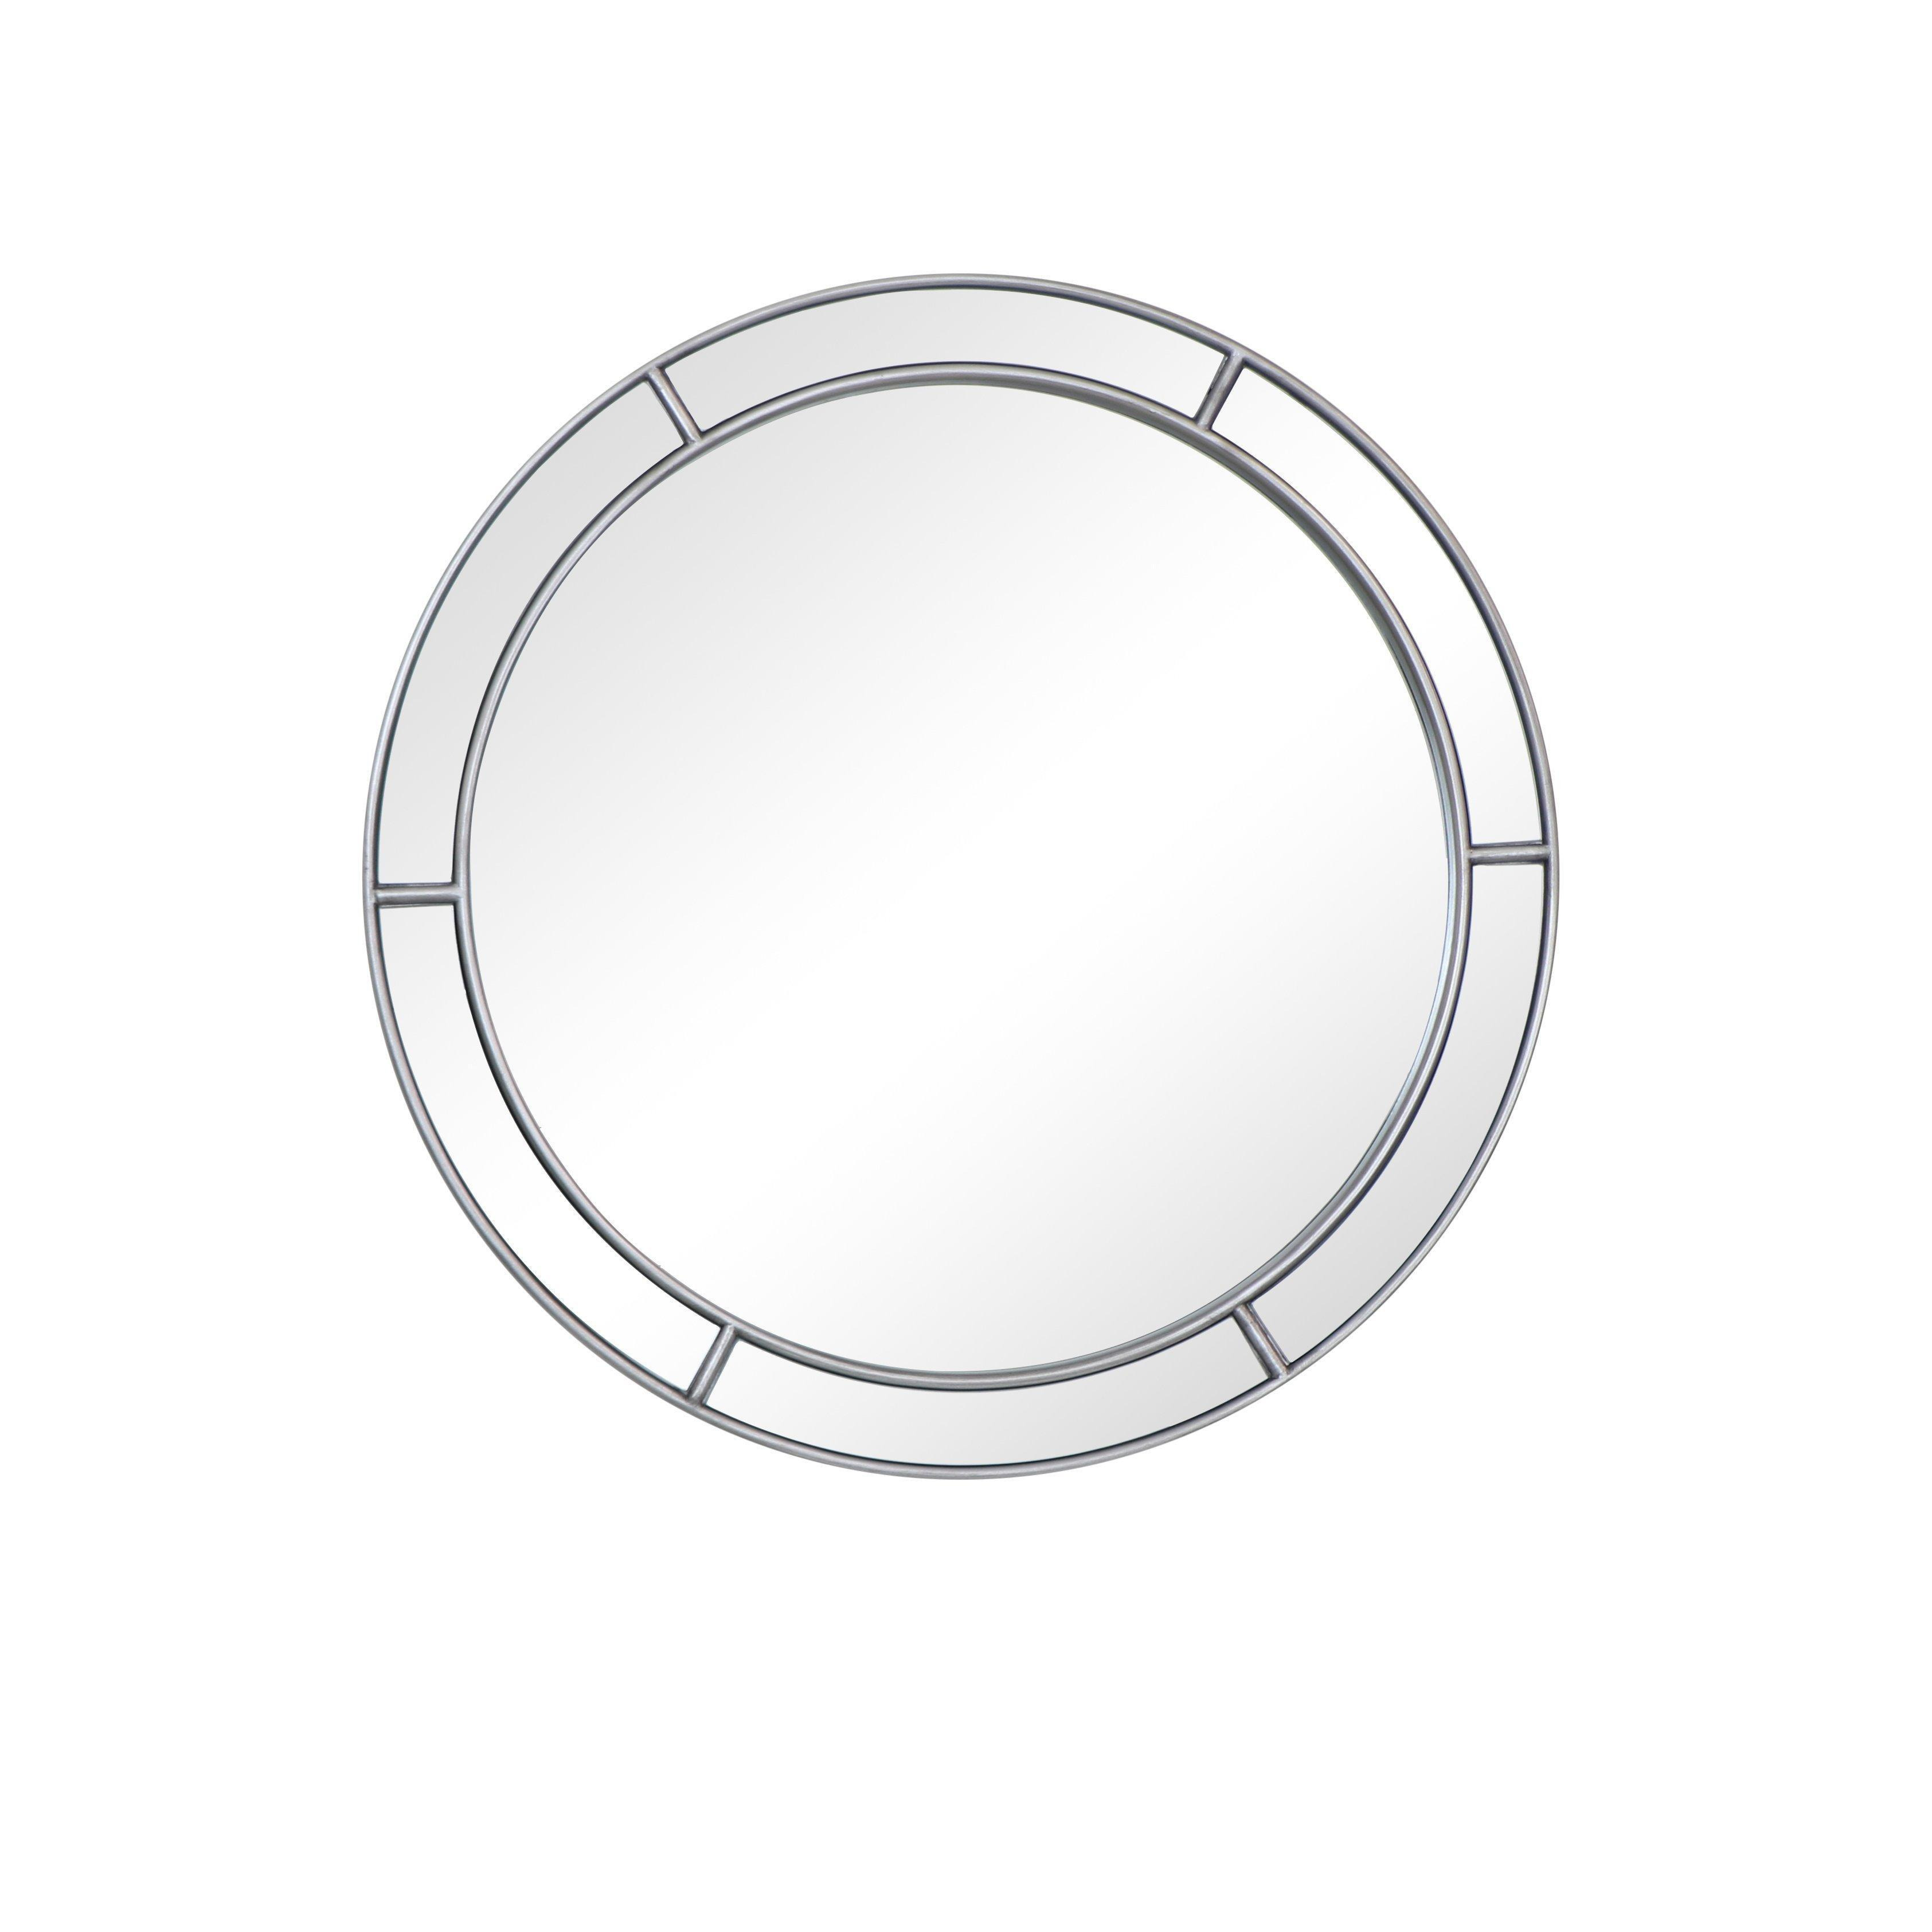 Art Deco-Inspired Silver Round Window Mirror: 80cm Size - image 1